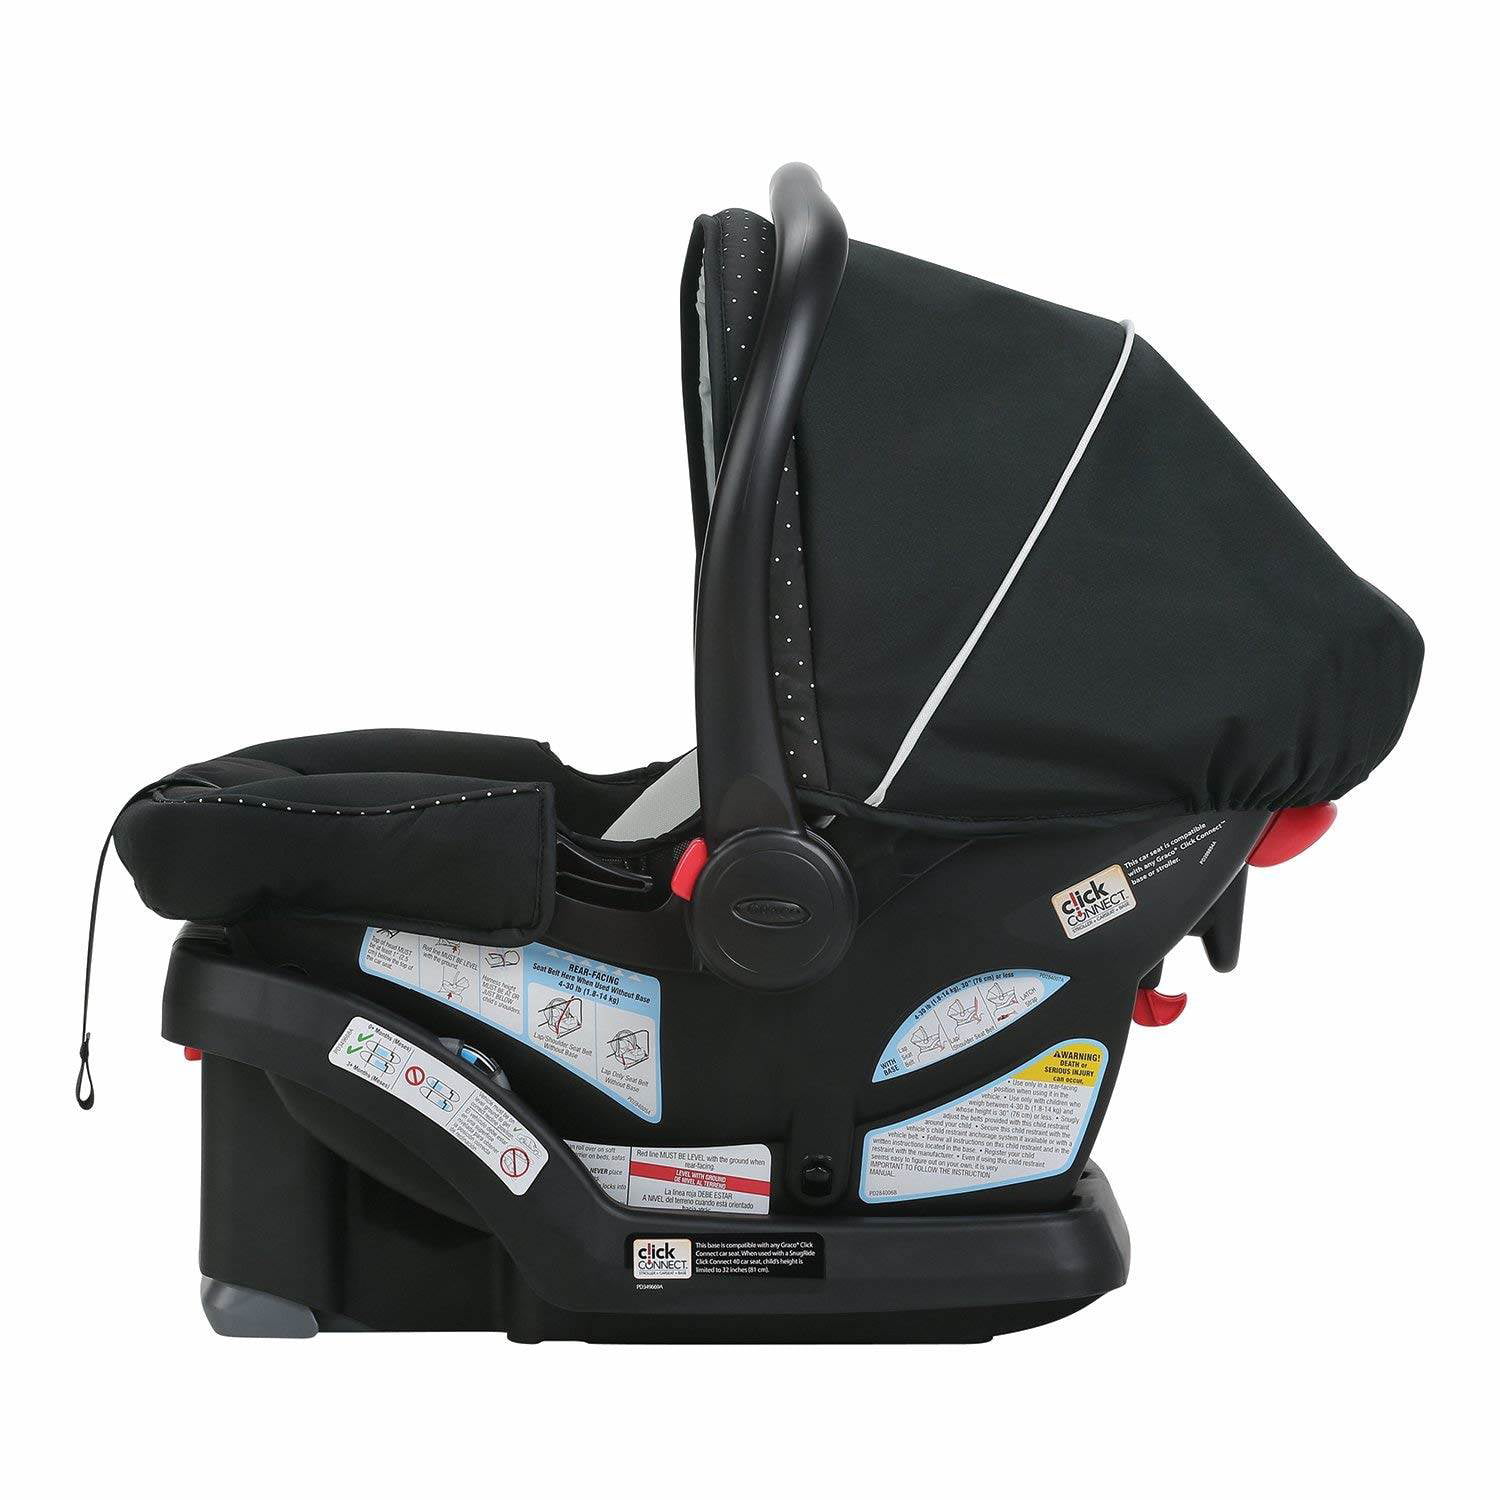 stroller compatible with graco snugride snuglock 35